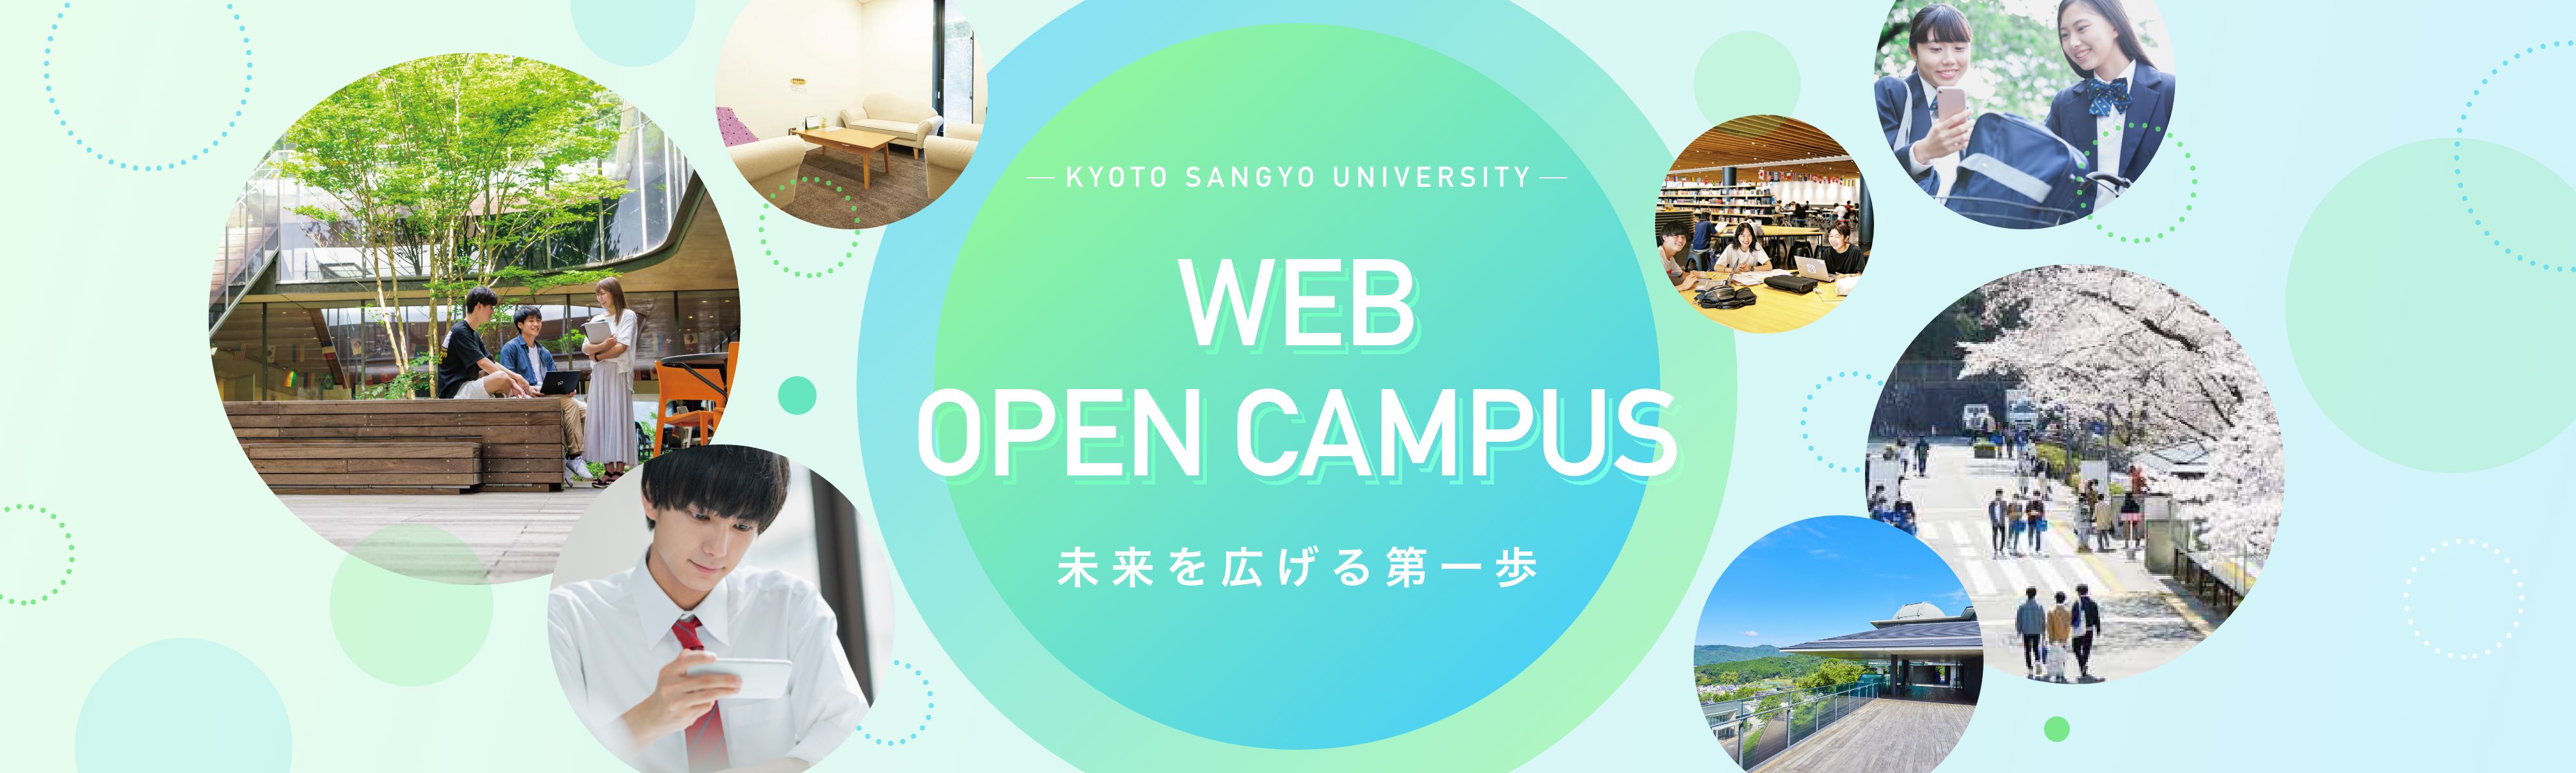 KYOTO SANGYO UNIVERSITY WEB OPEN CAMPUS 未来を広げる第一歩